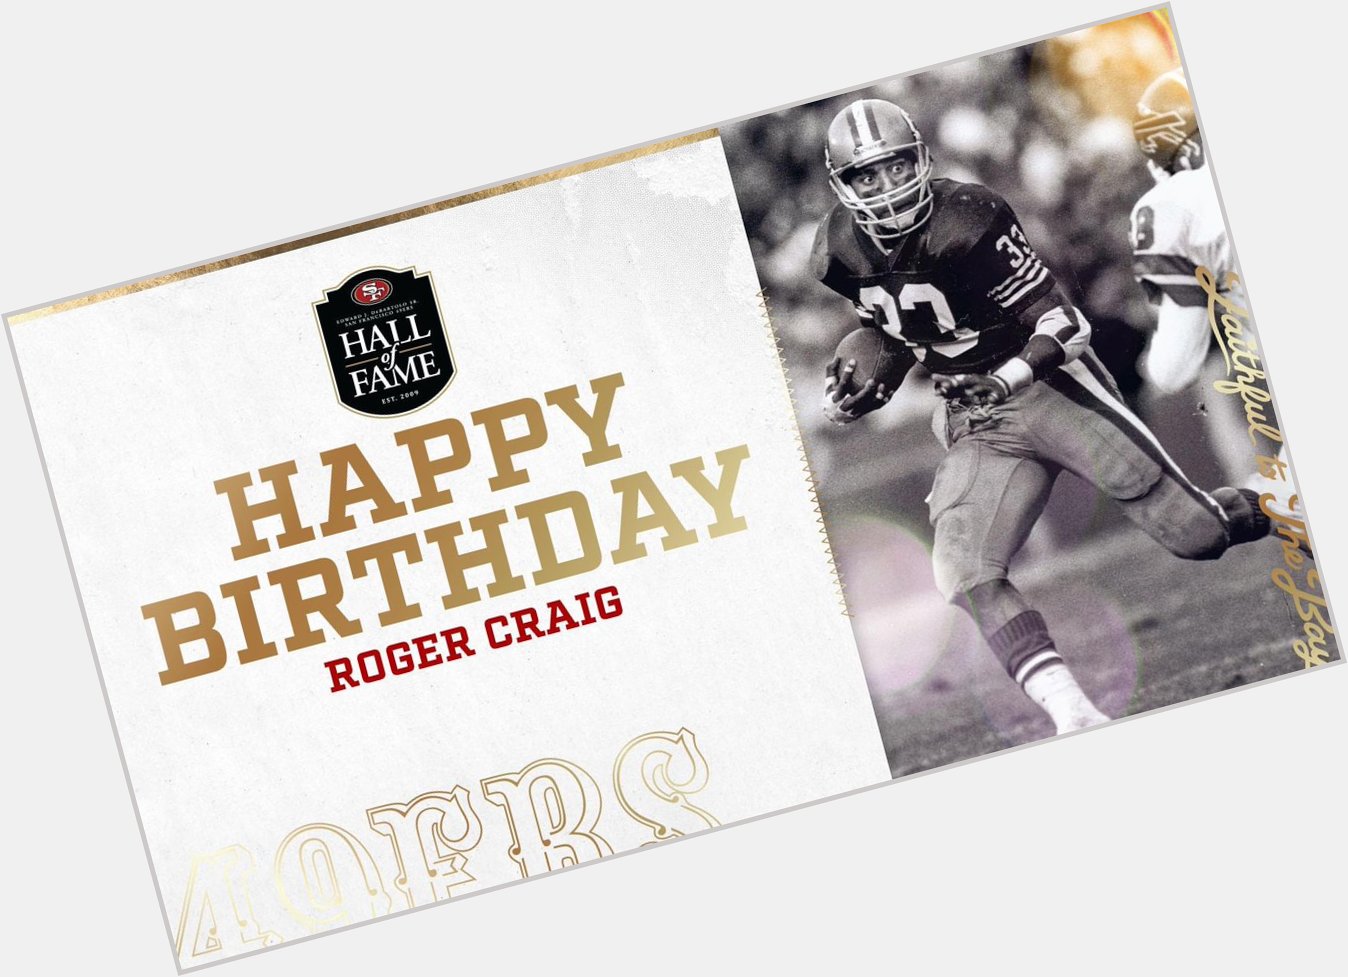 Happy birthday Roger Craig!! 